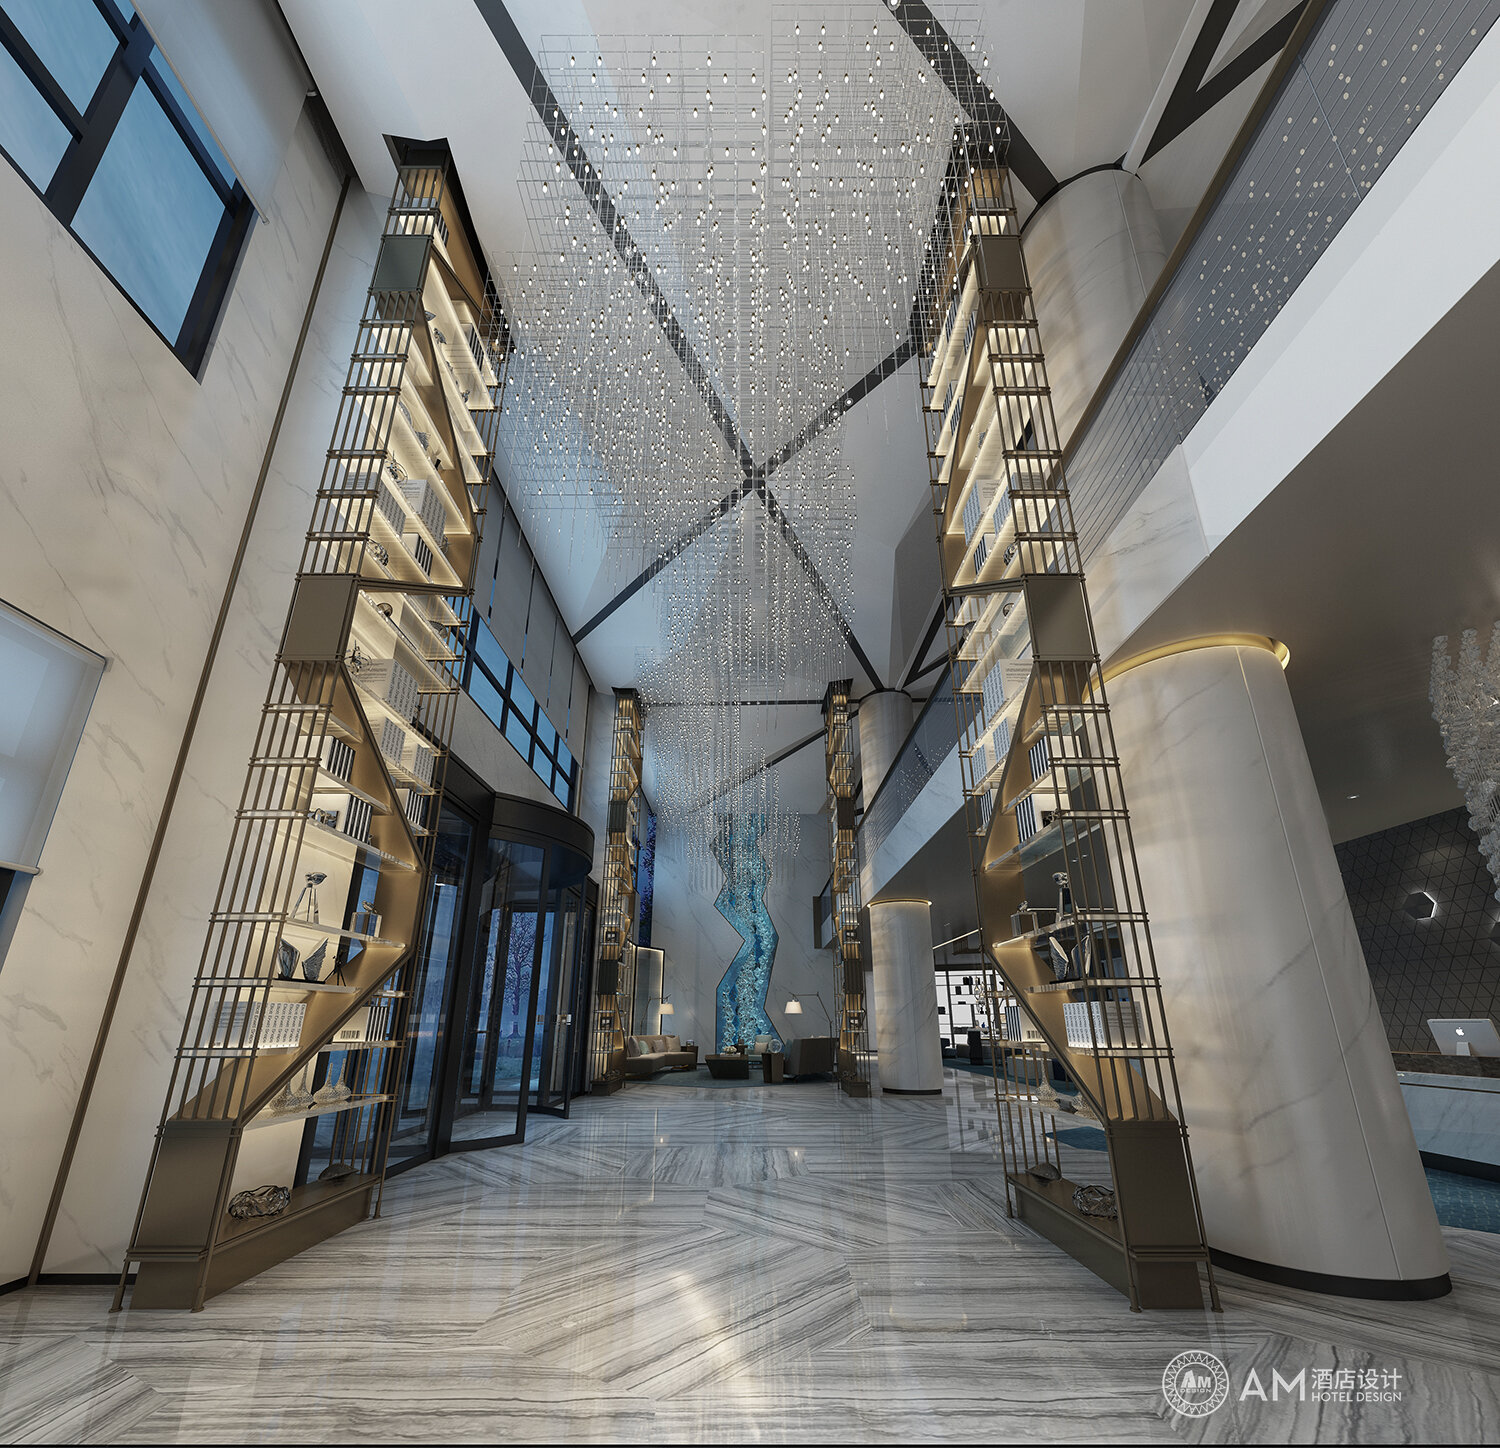 AM DESIGN | Lobby design of Jinpan Hotel